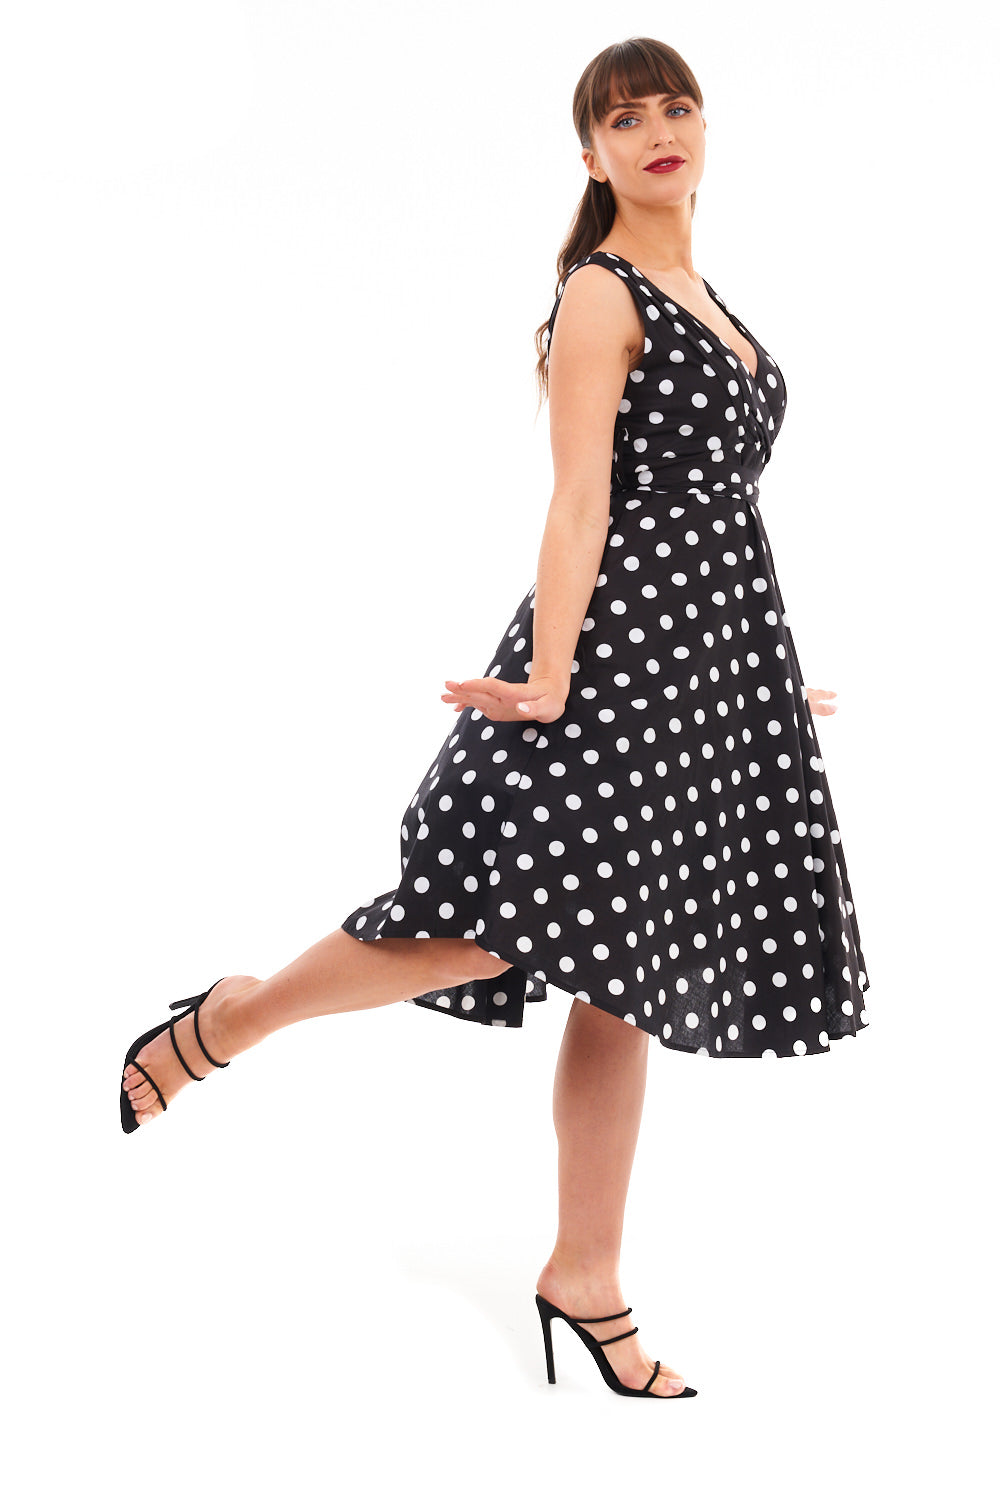 Ladies Retro Vintage 1950's Rockabilly Swing Polka Dot Dress in Black